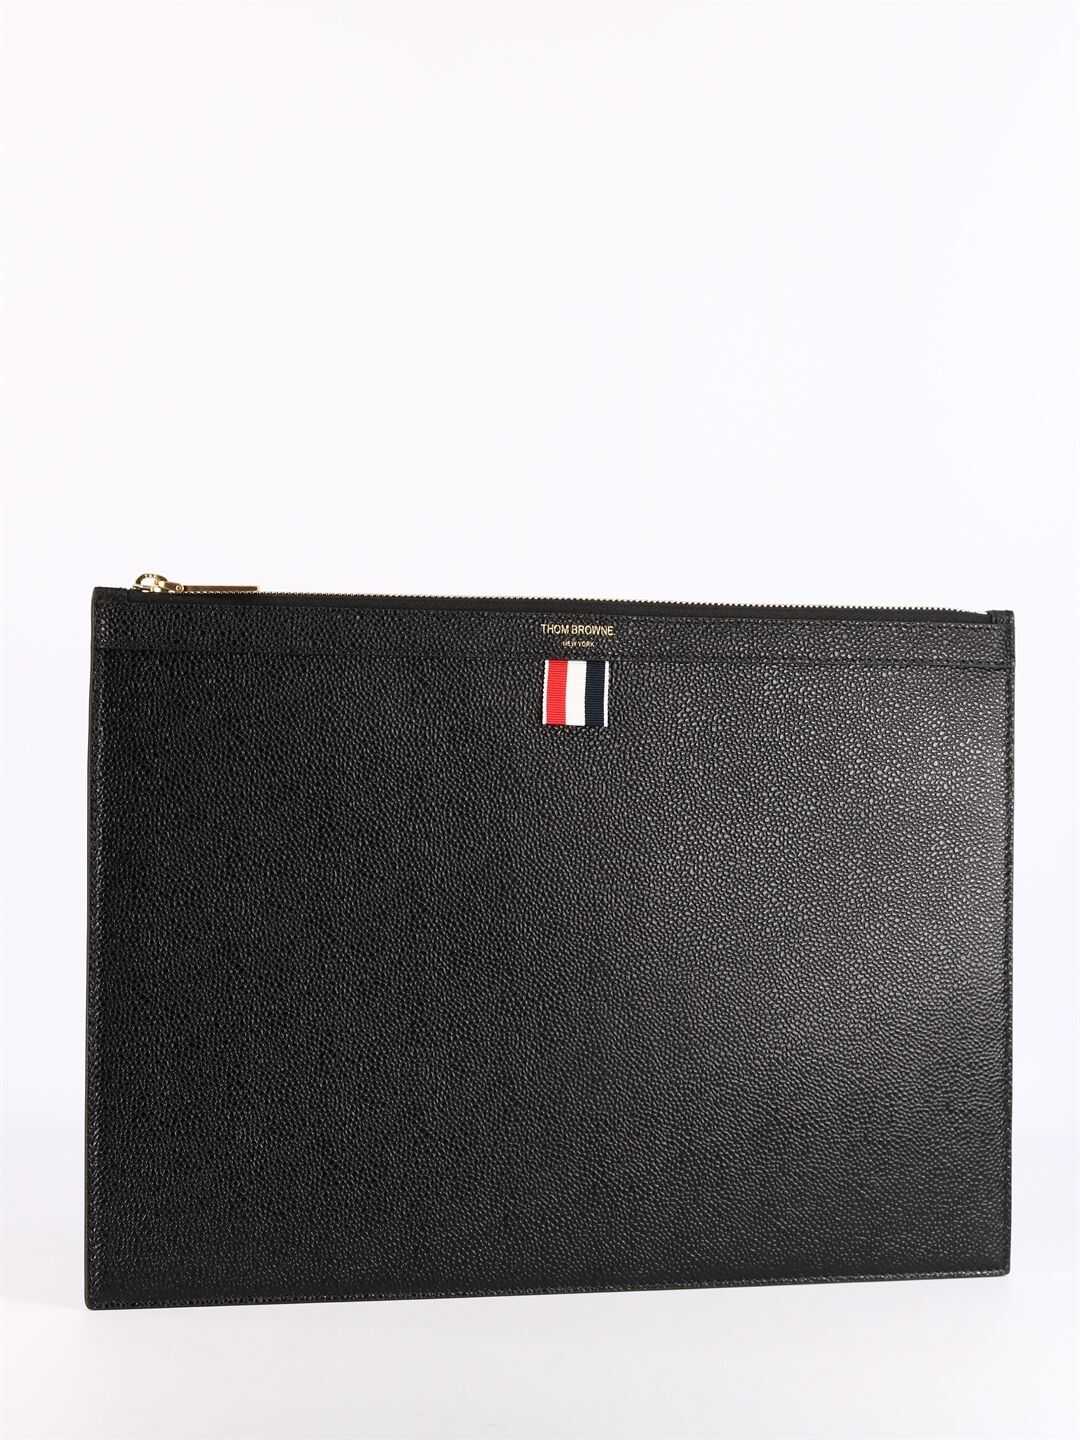 Thom Browne Leather Document Holder MAC021L 00198 Black